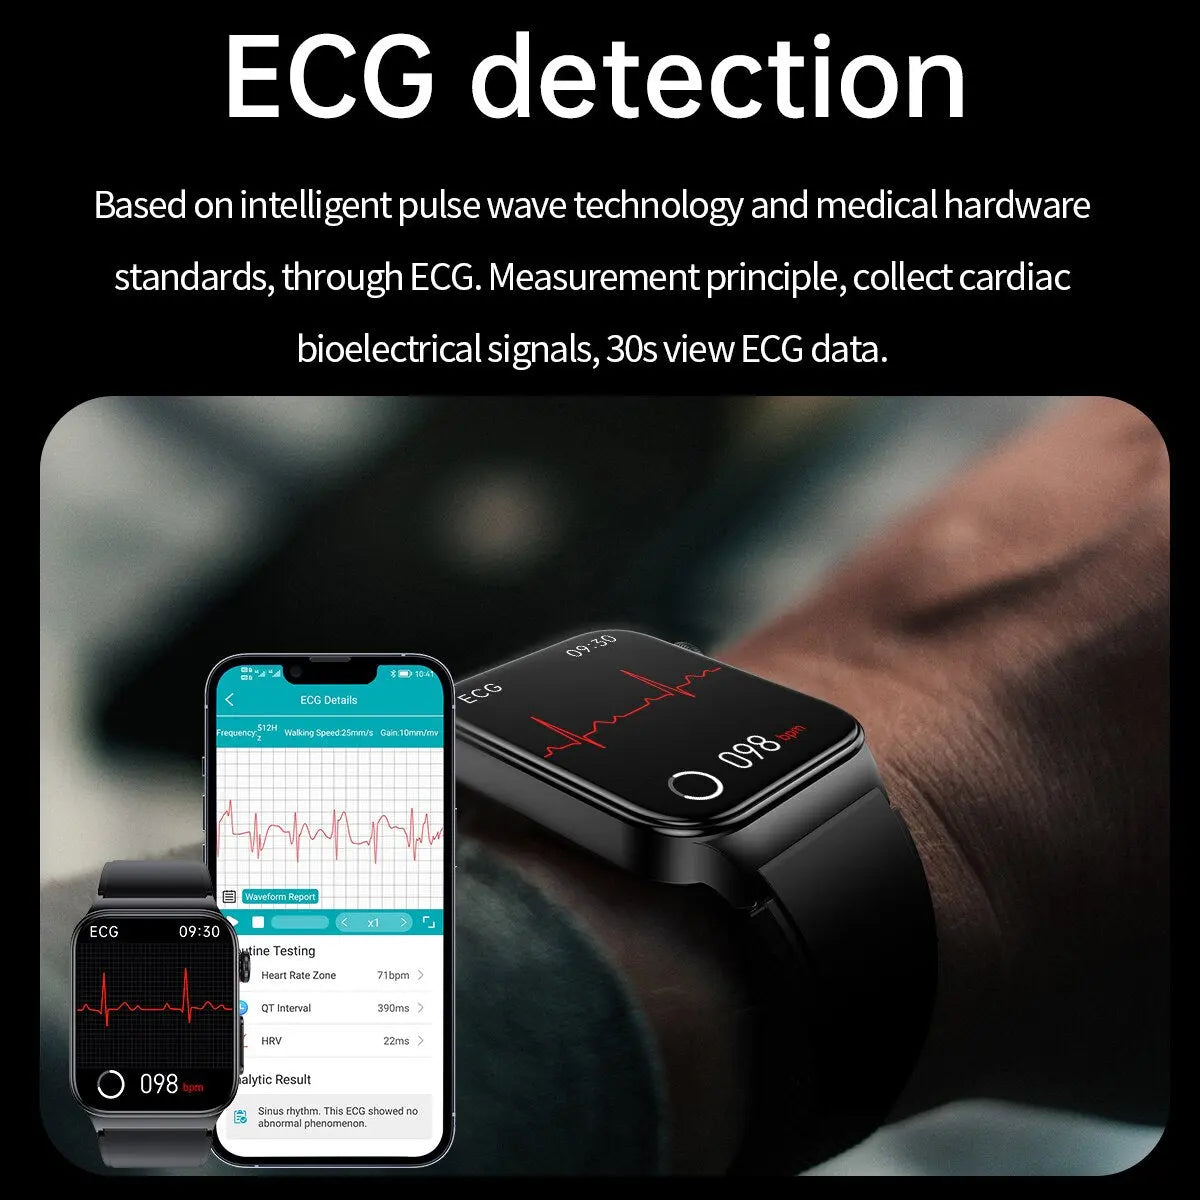 ECG+PPG Smart Watch Men Laser Treatment Of Hypertension  Apparel & Accessories > Jewelry > Watches 237.00 EZYSELLA SHOP